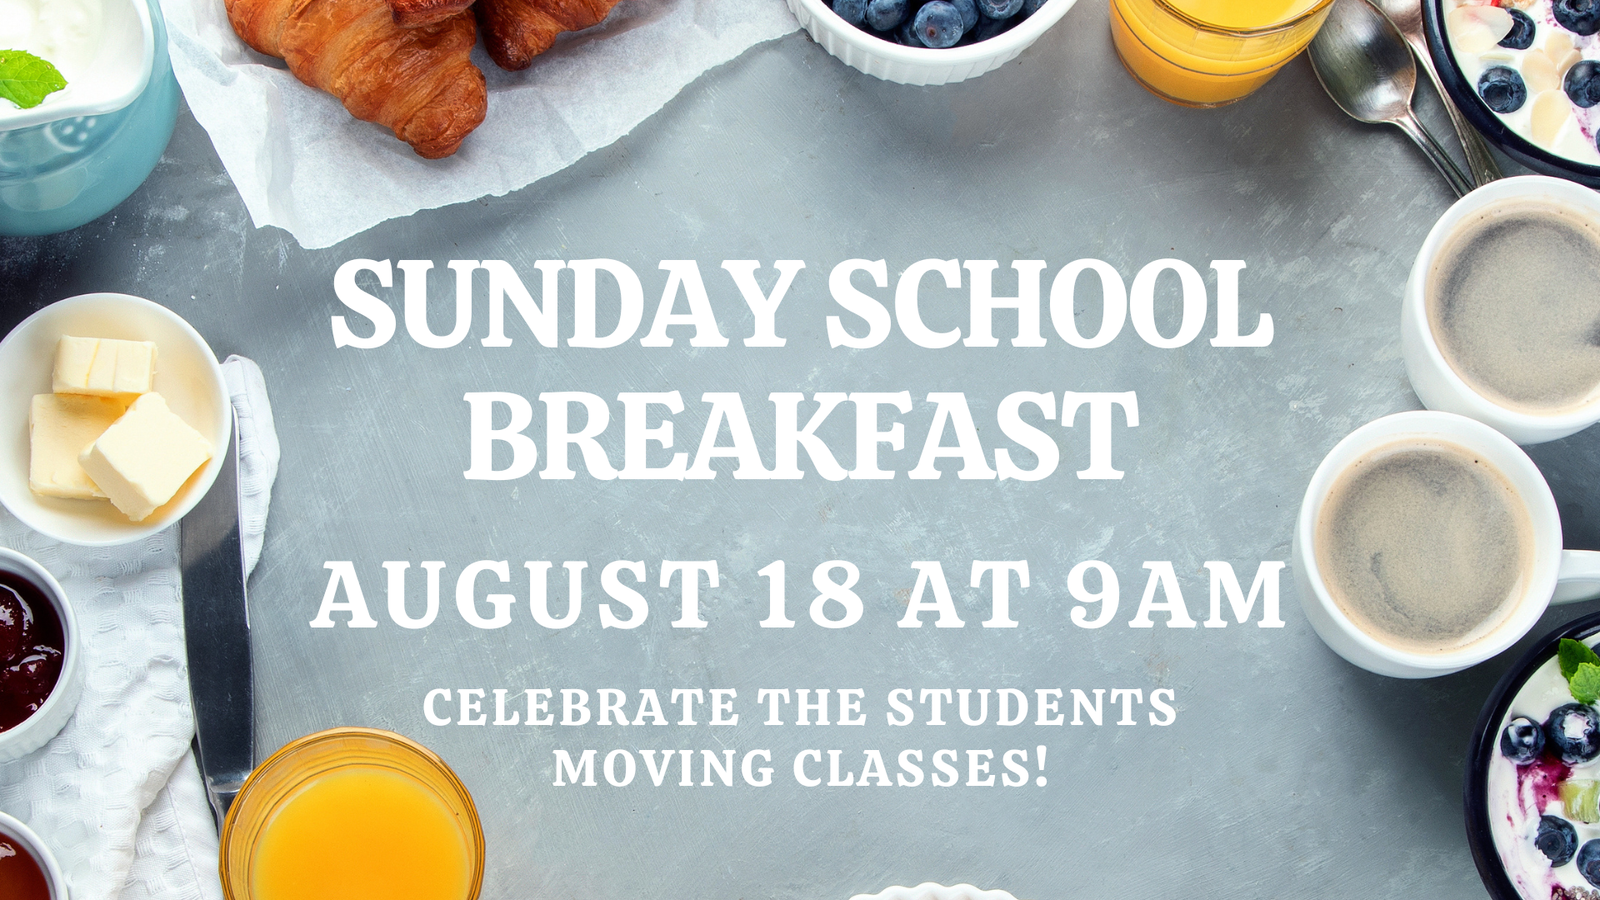 Sunday School Breakfast August 18